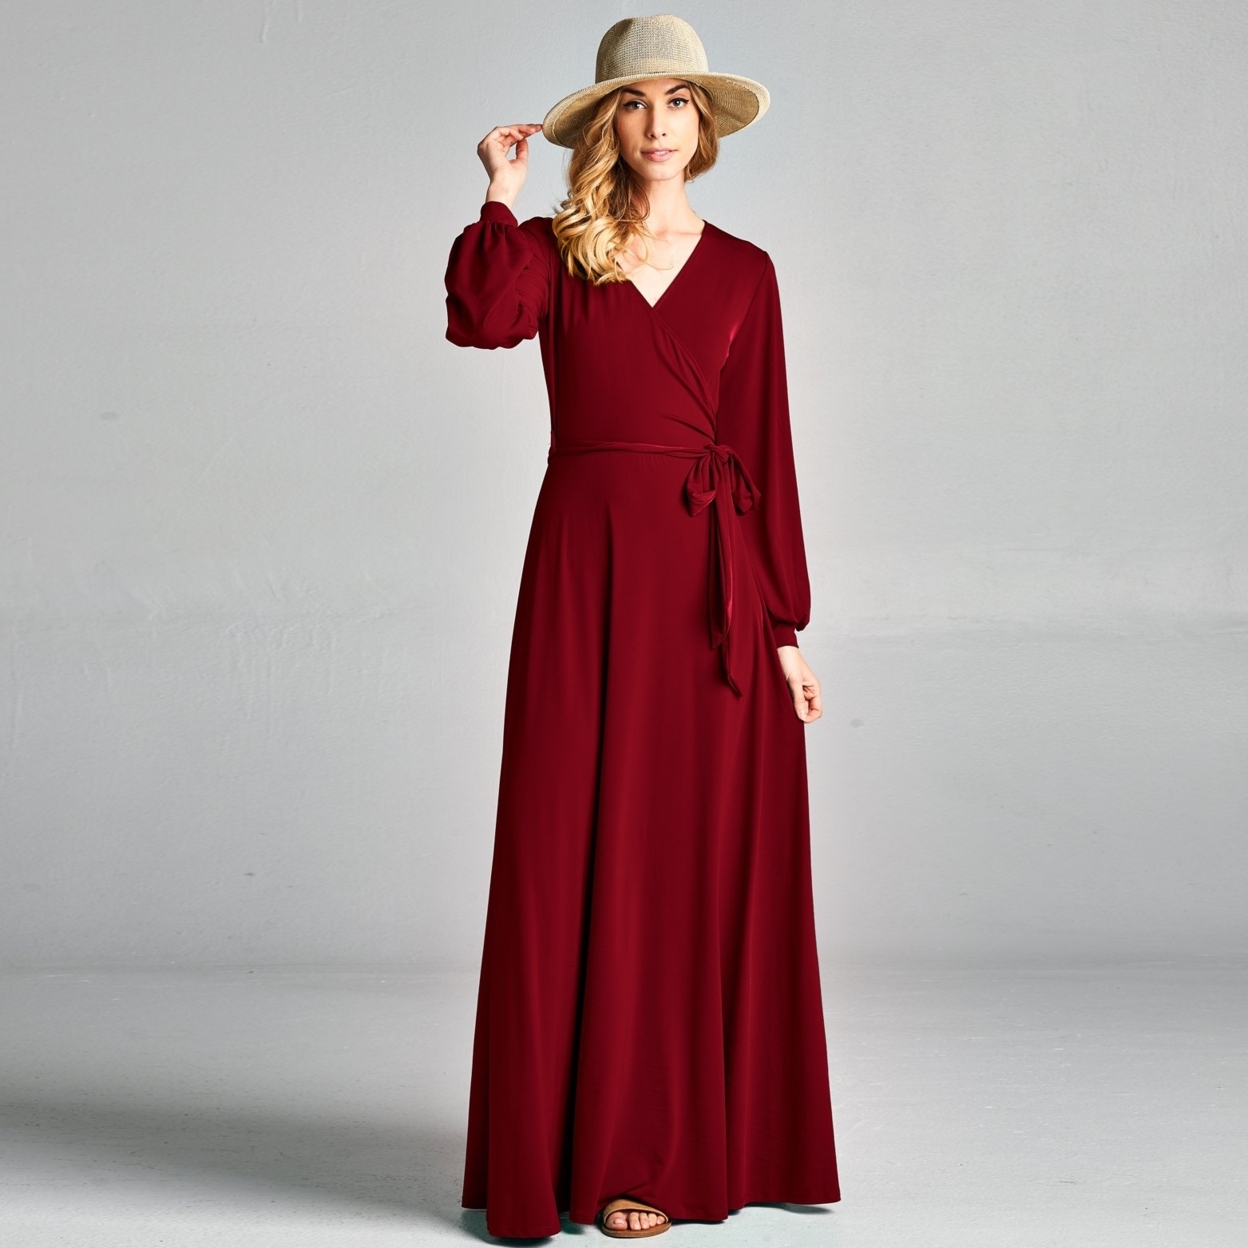 Cuffed Sleeve Venechia Wrap Dress - Burgundy, Small (2-6)